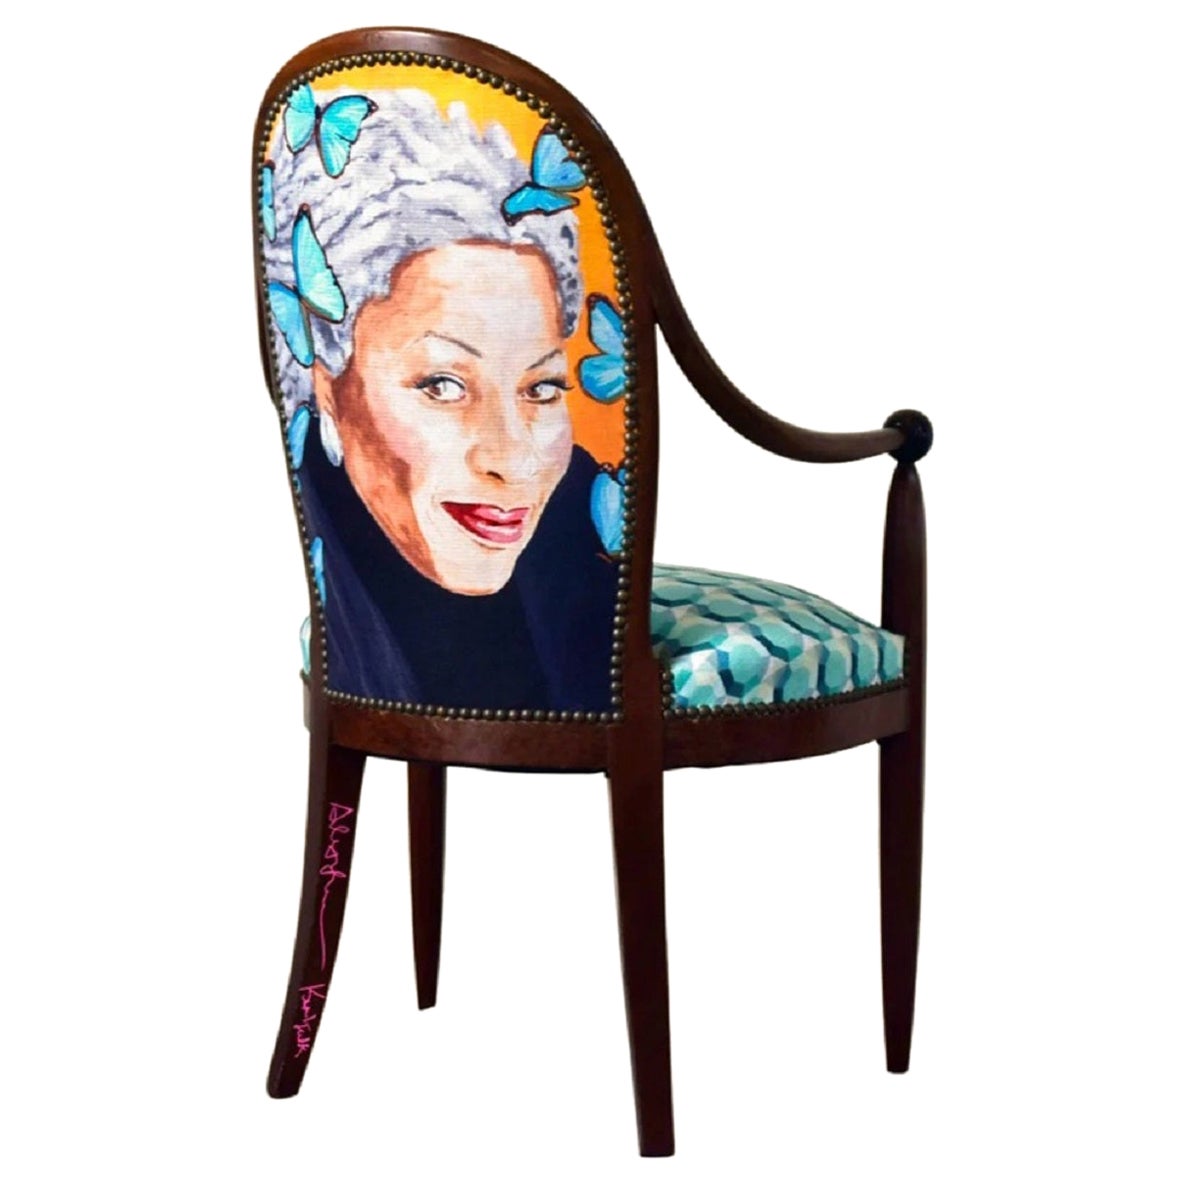 "Toni Morrison" Dining Chair by Ashley Longshore x Ken Fulk, 2021